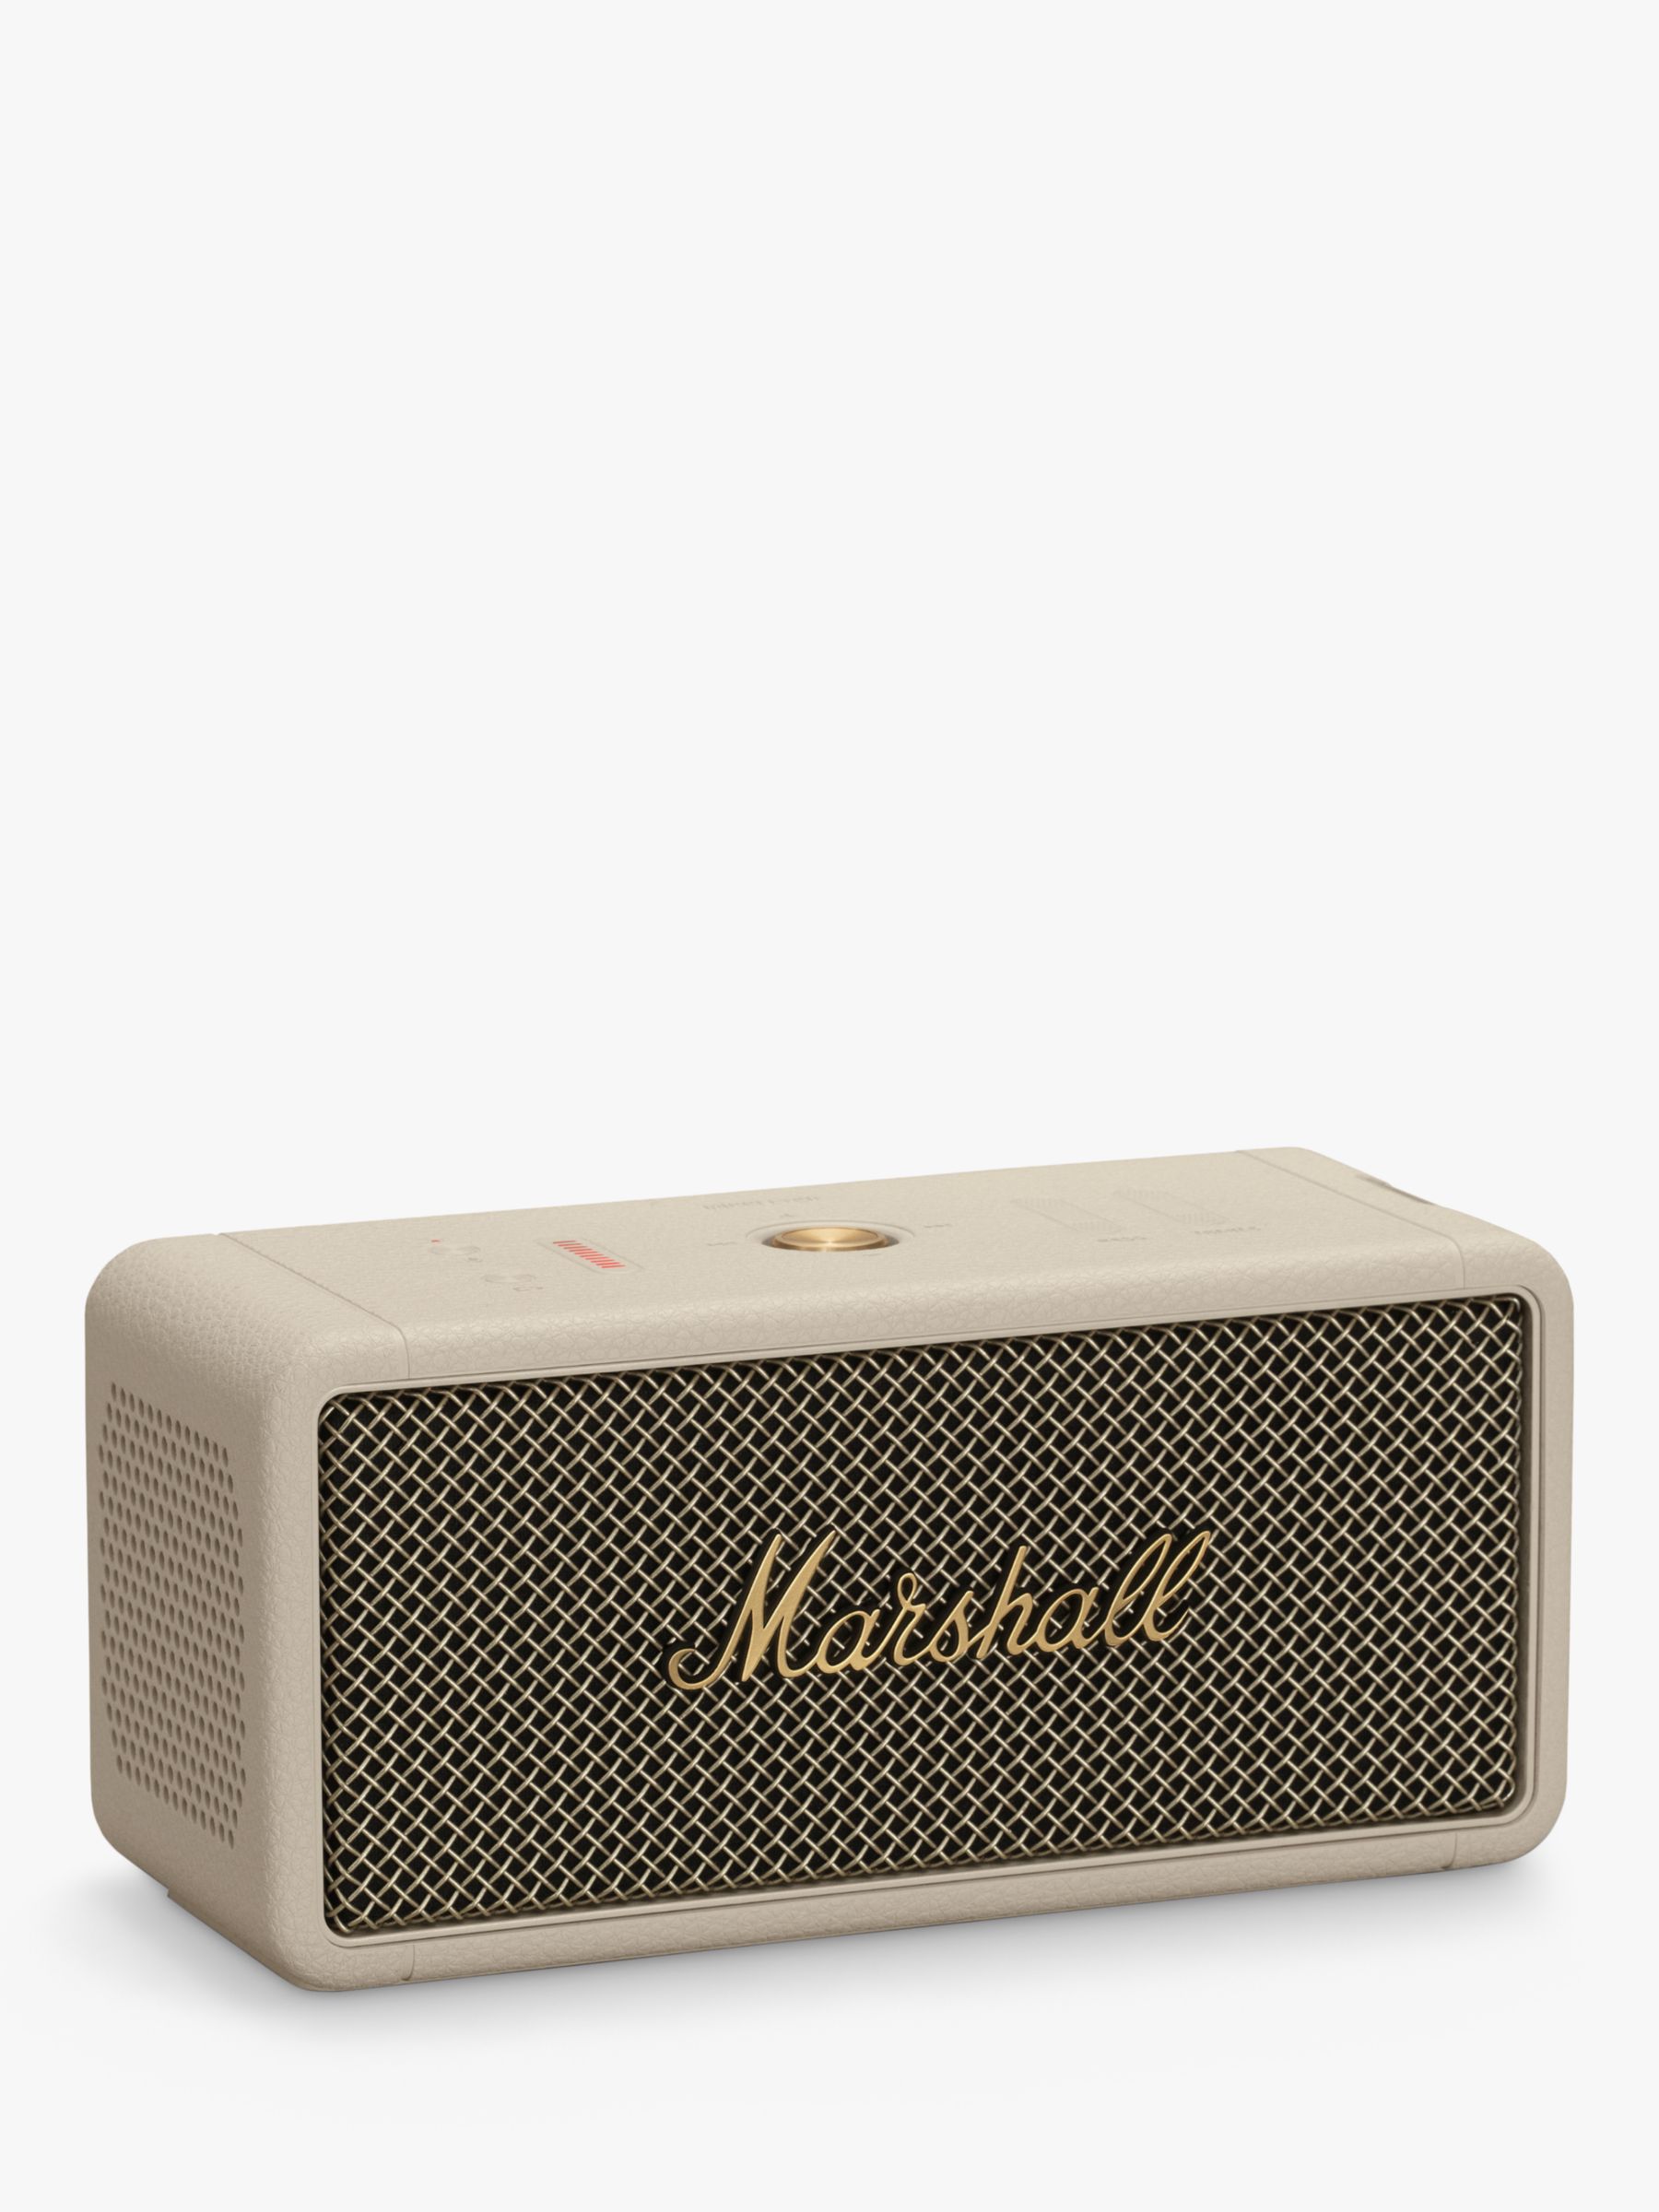 Marshall - MIDDLETON BLUETOOTH PORTABLE SPEAKER - Cream 